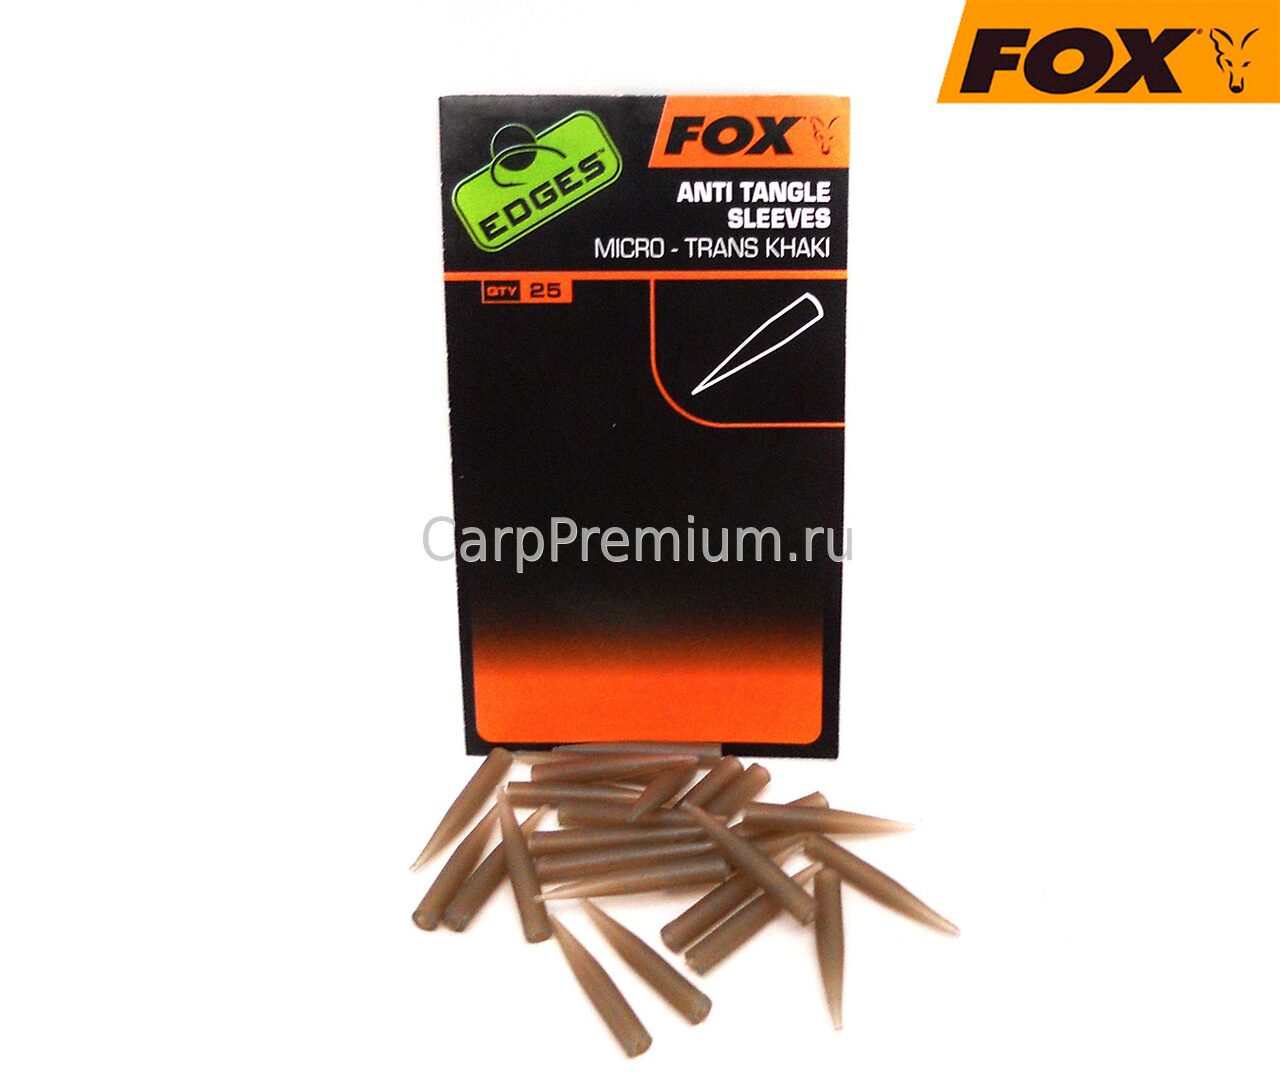 Отводчики для поводка Малые Fox (Фокс) - EDGES Anti Tangle Sleeves Micro, 25 шт